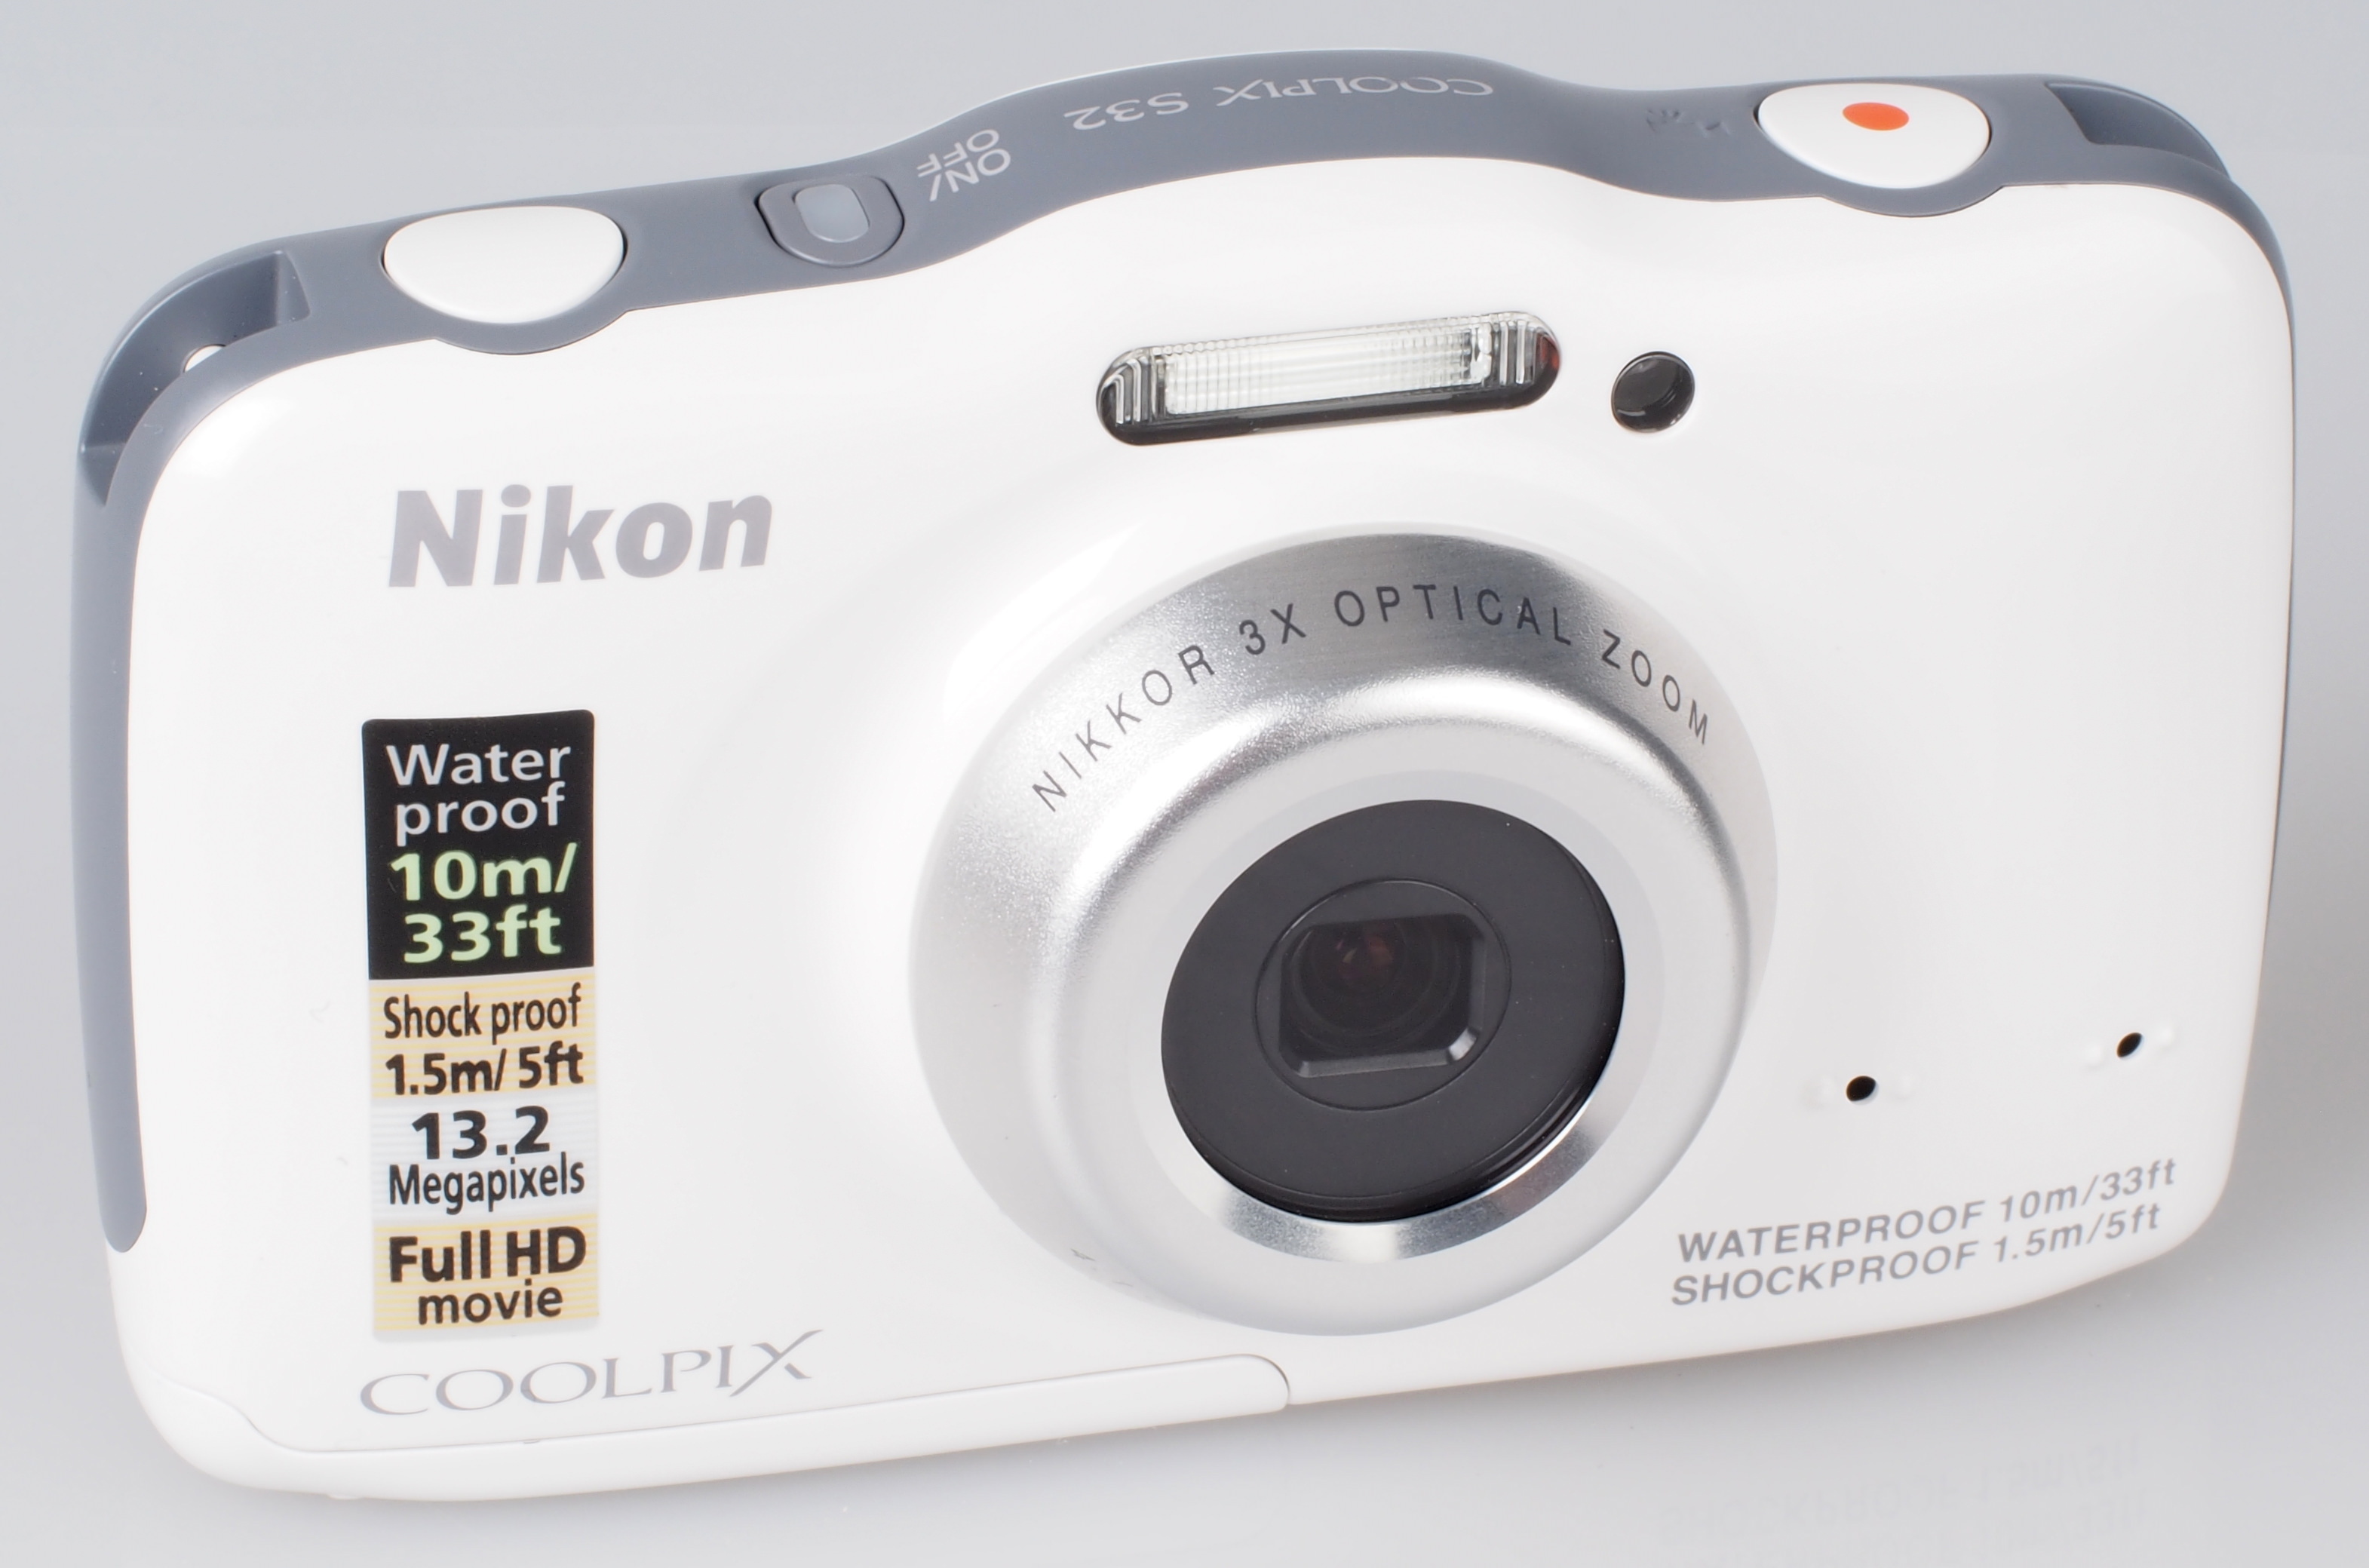 Nikon Coolpix S32 Waterproof Camera Review